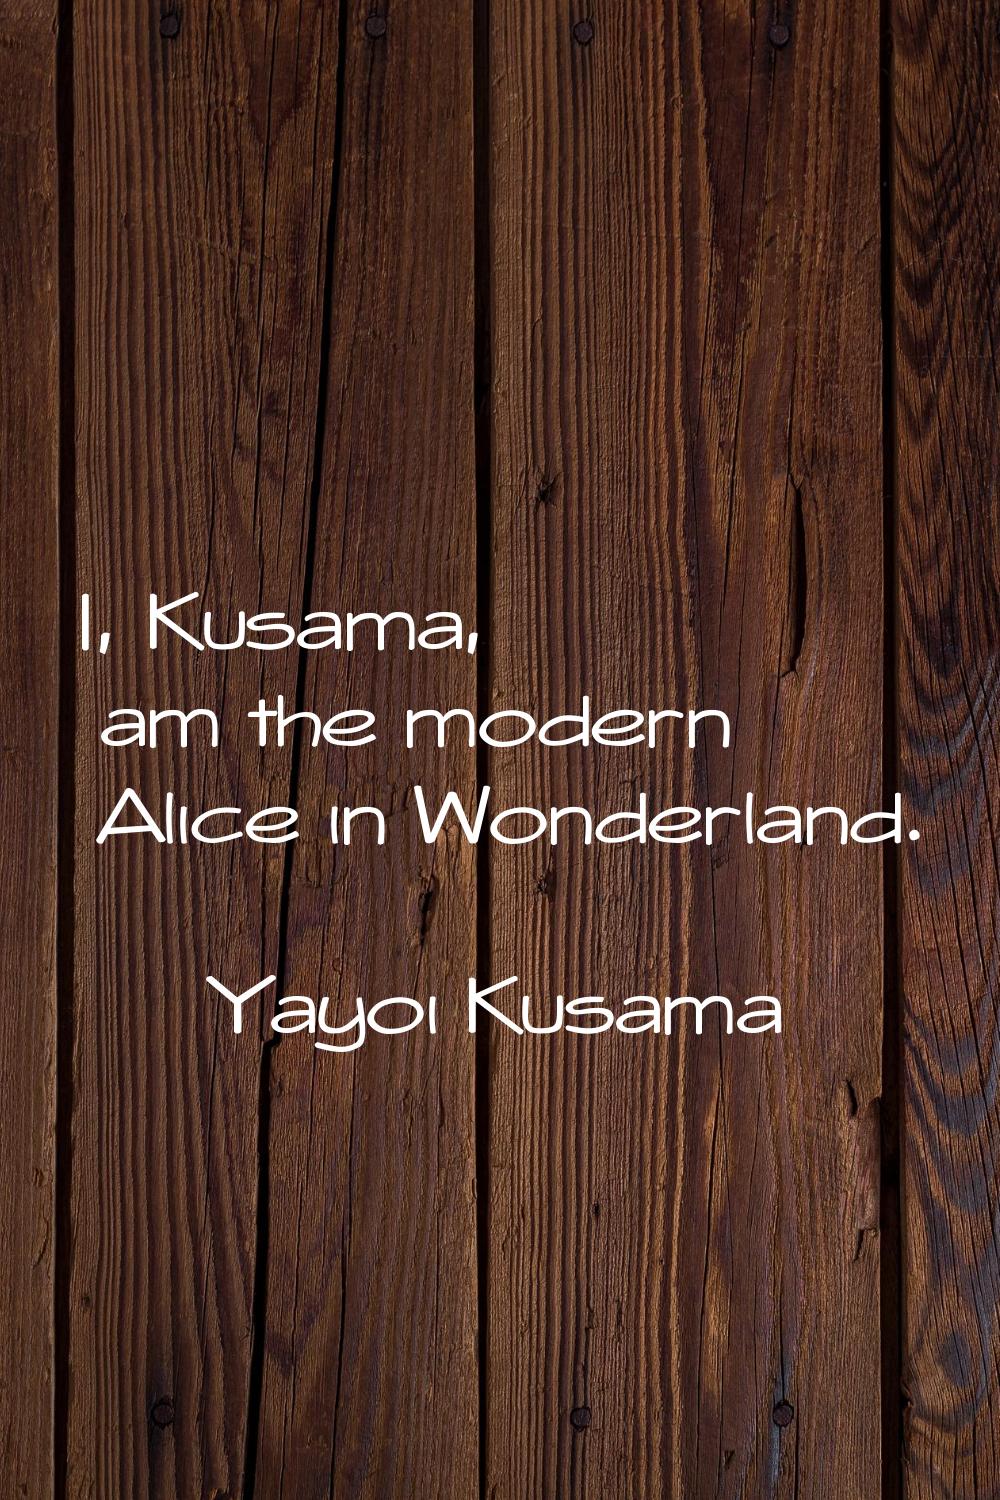 I, Kusama, am the modern Alice in Wonderland.